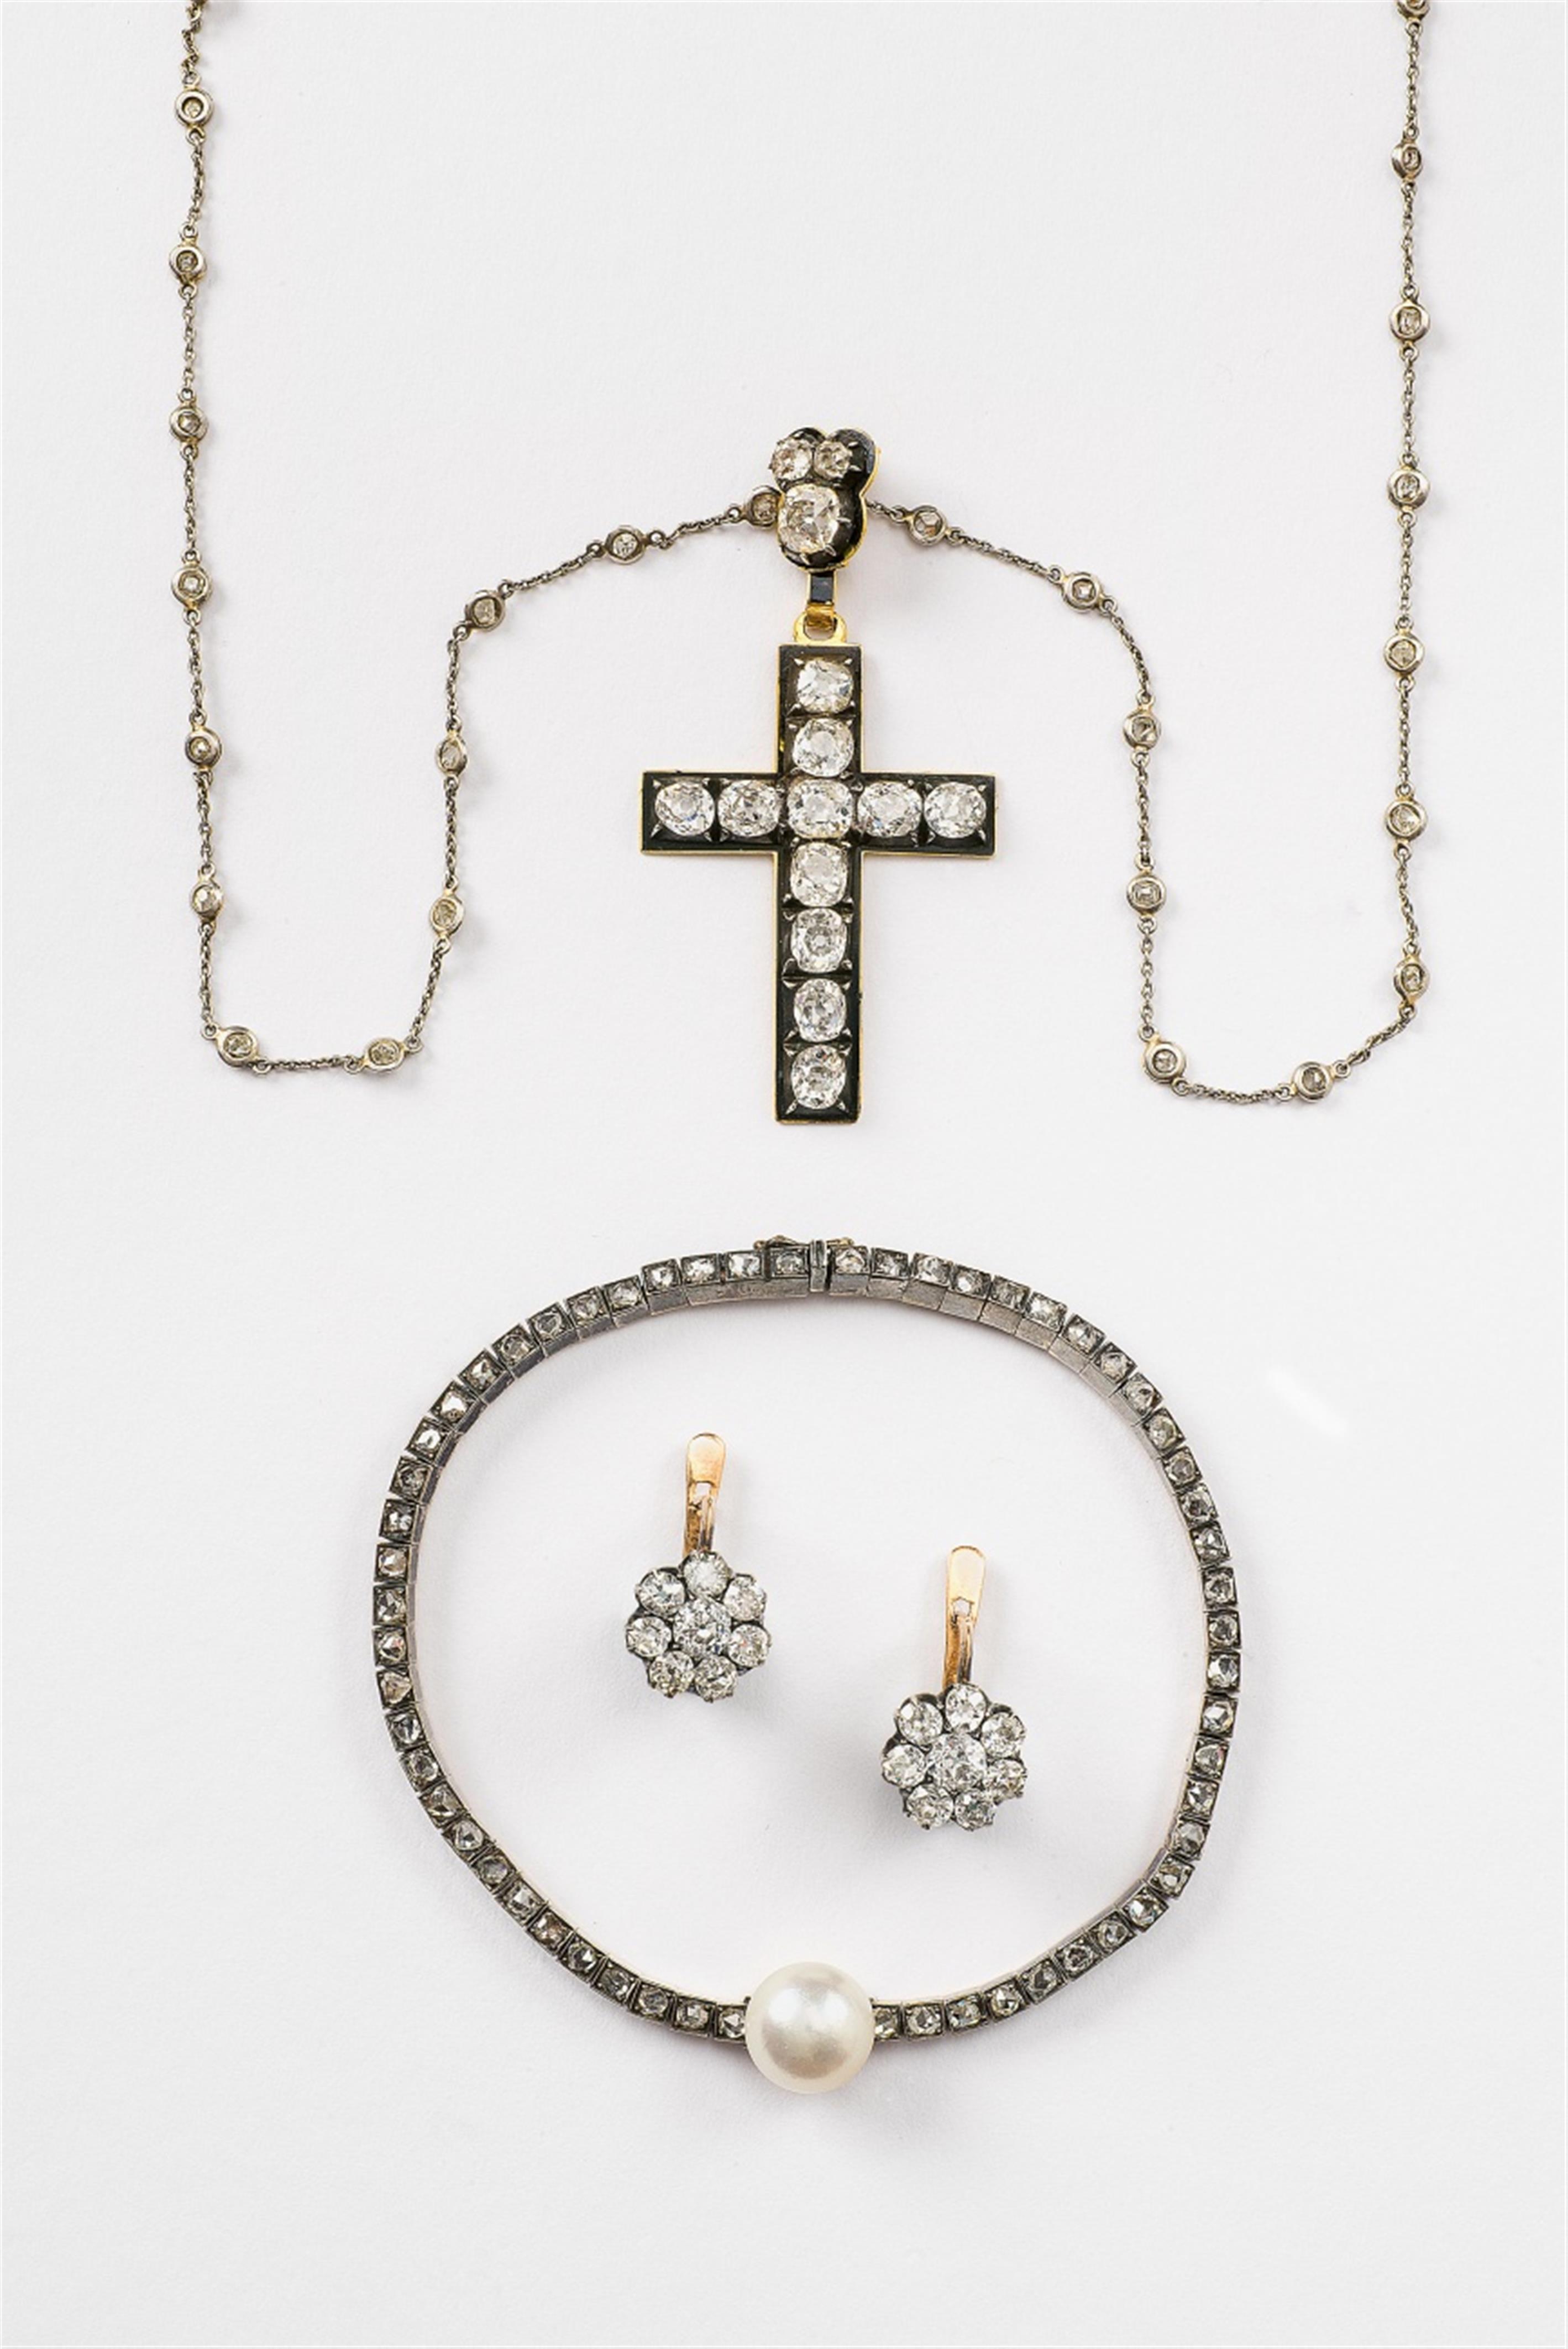 An 18k gold and diamond cross pendant - image-1